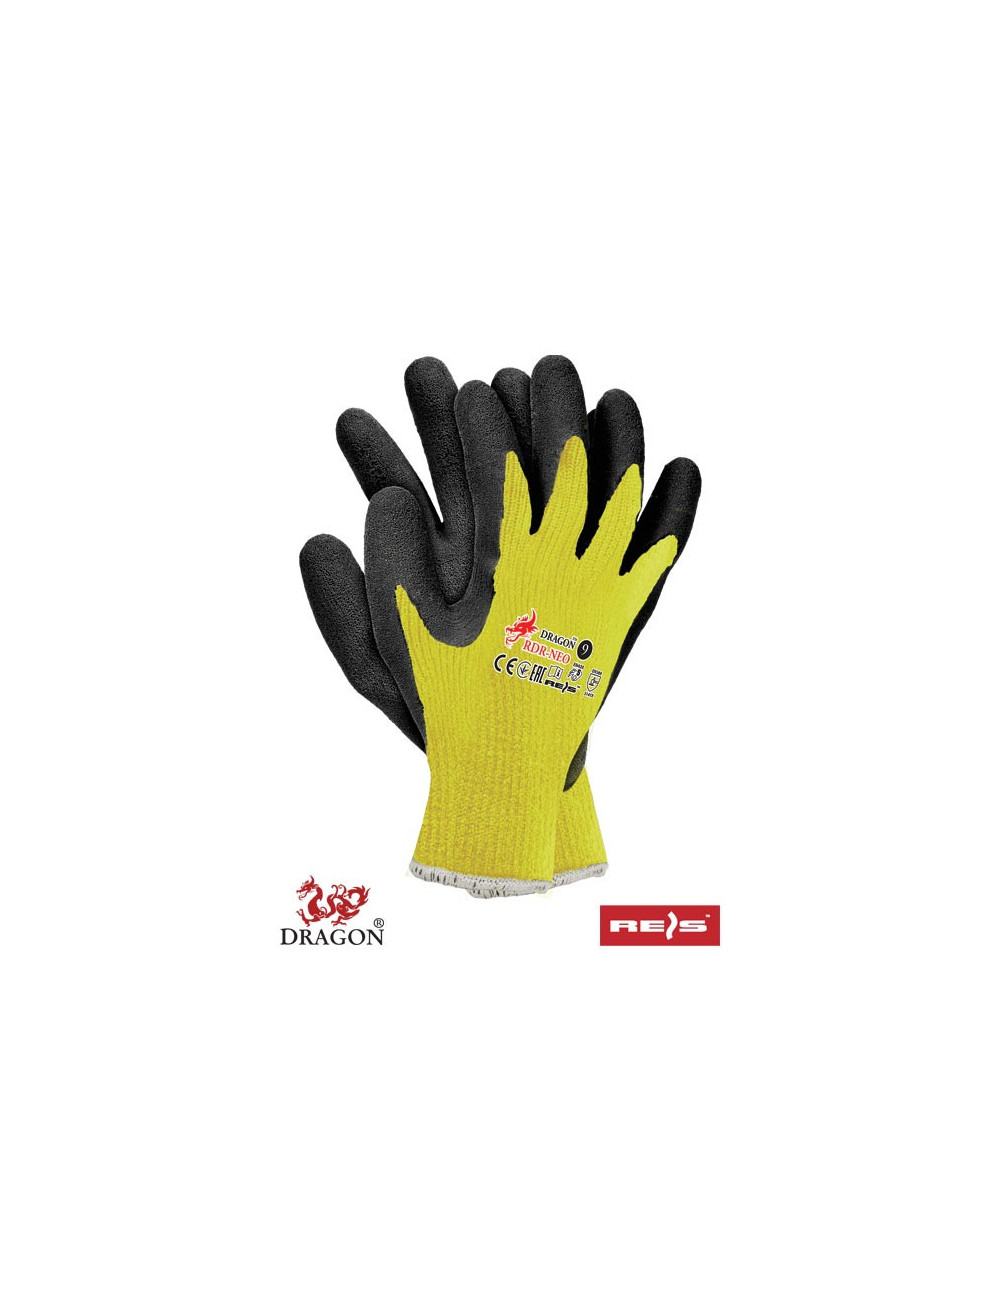 Protective gloves rdr-neo yb yellow-black Reis